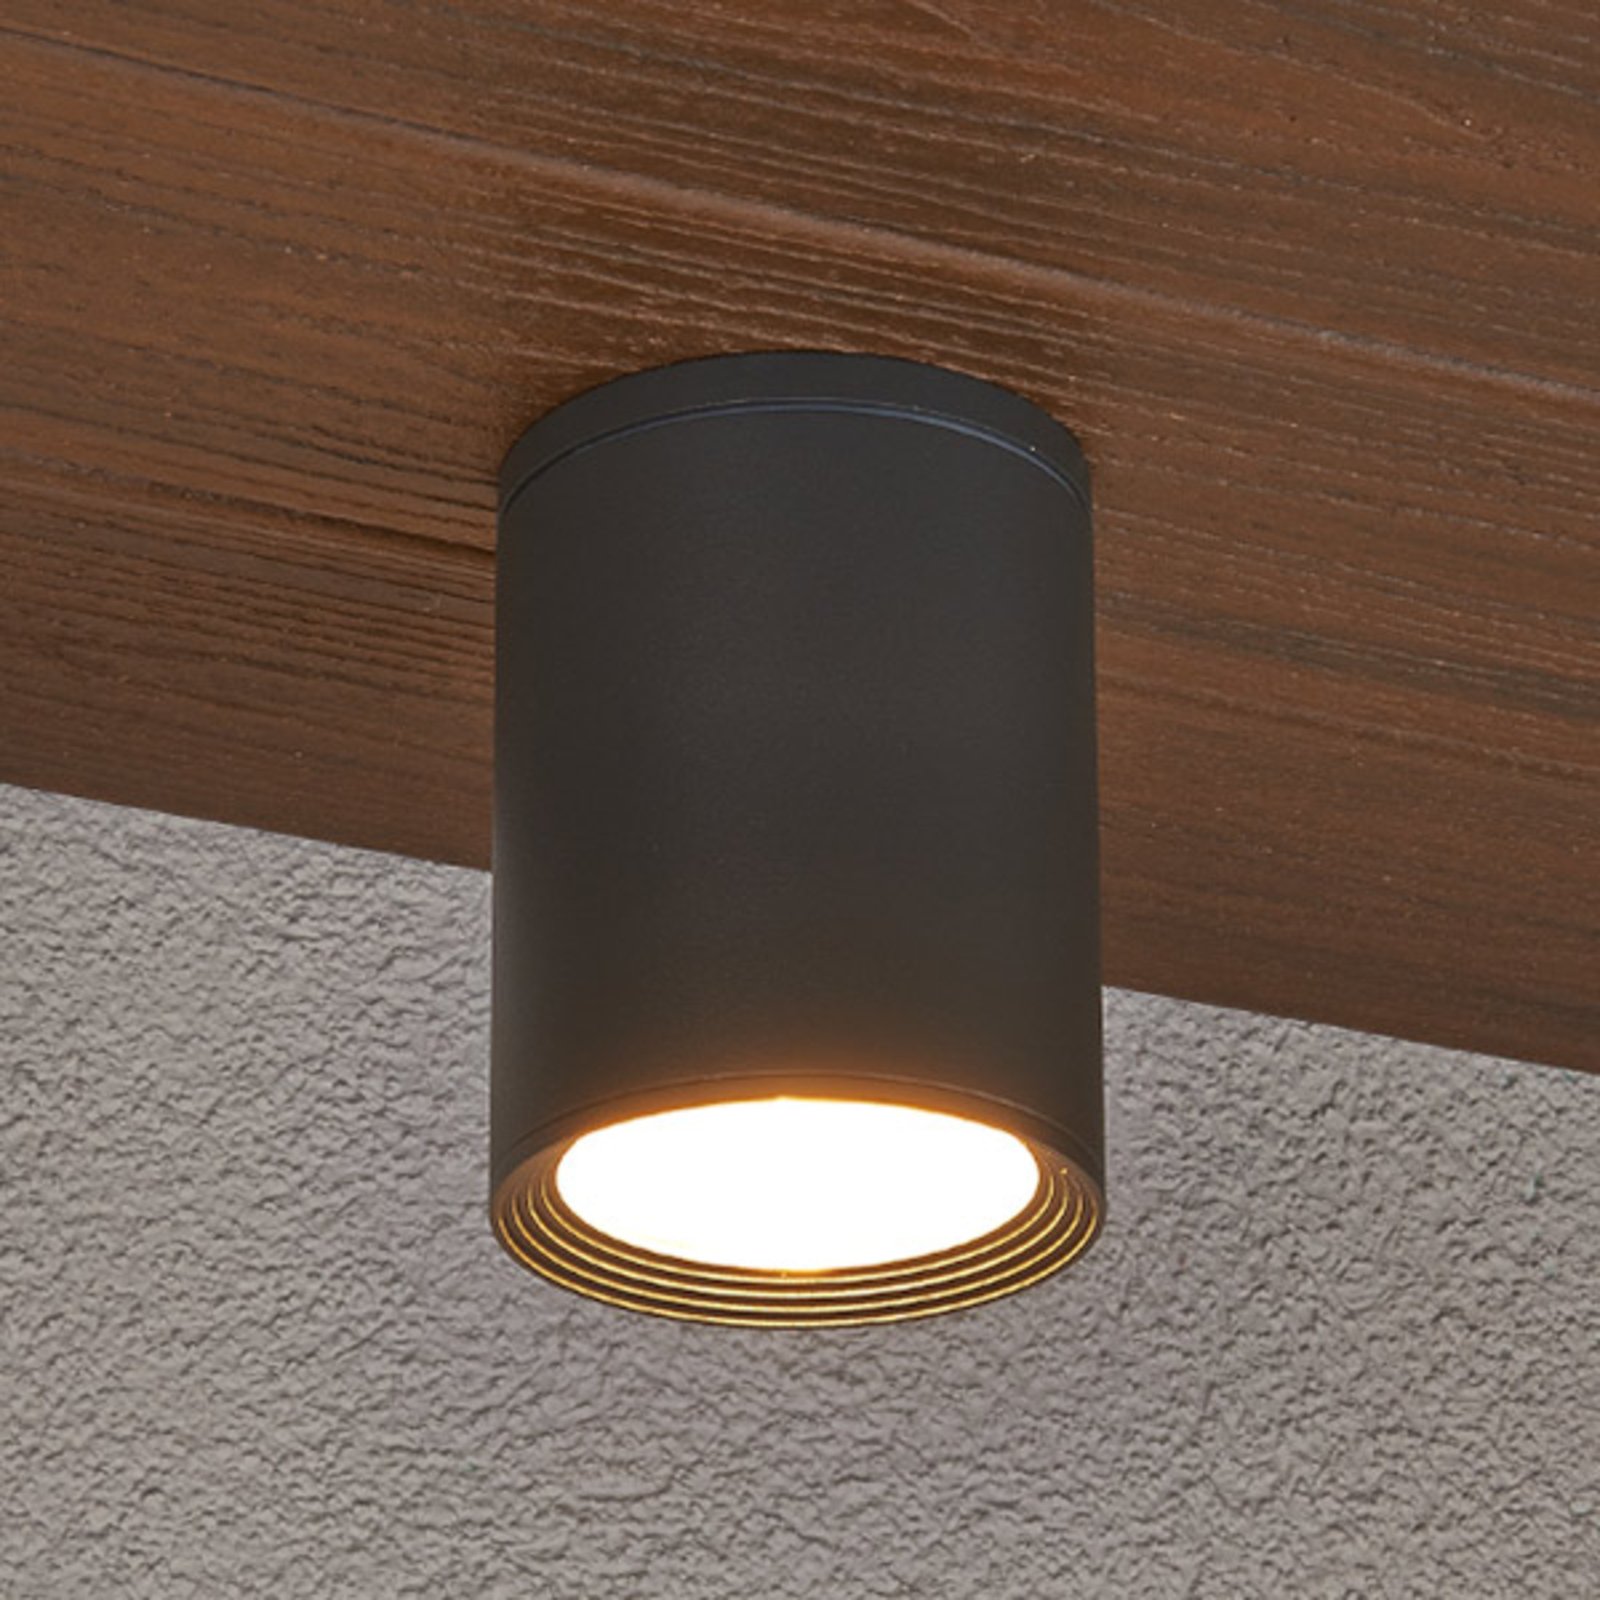 Minna dark grey ceiling light for outdoors